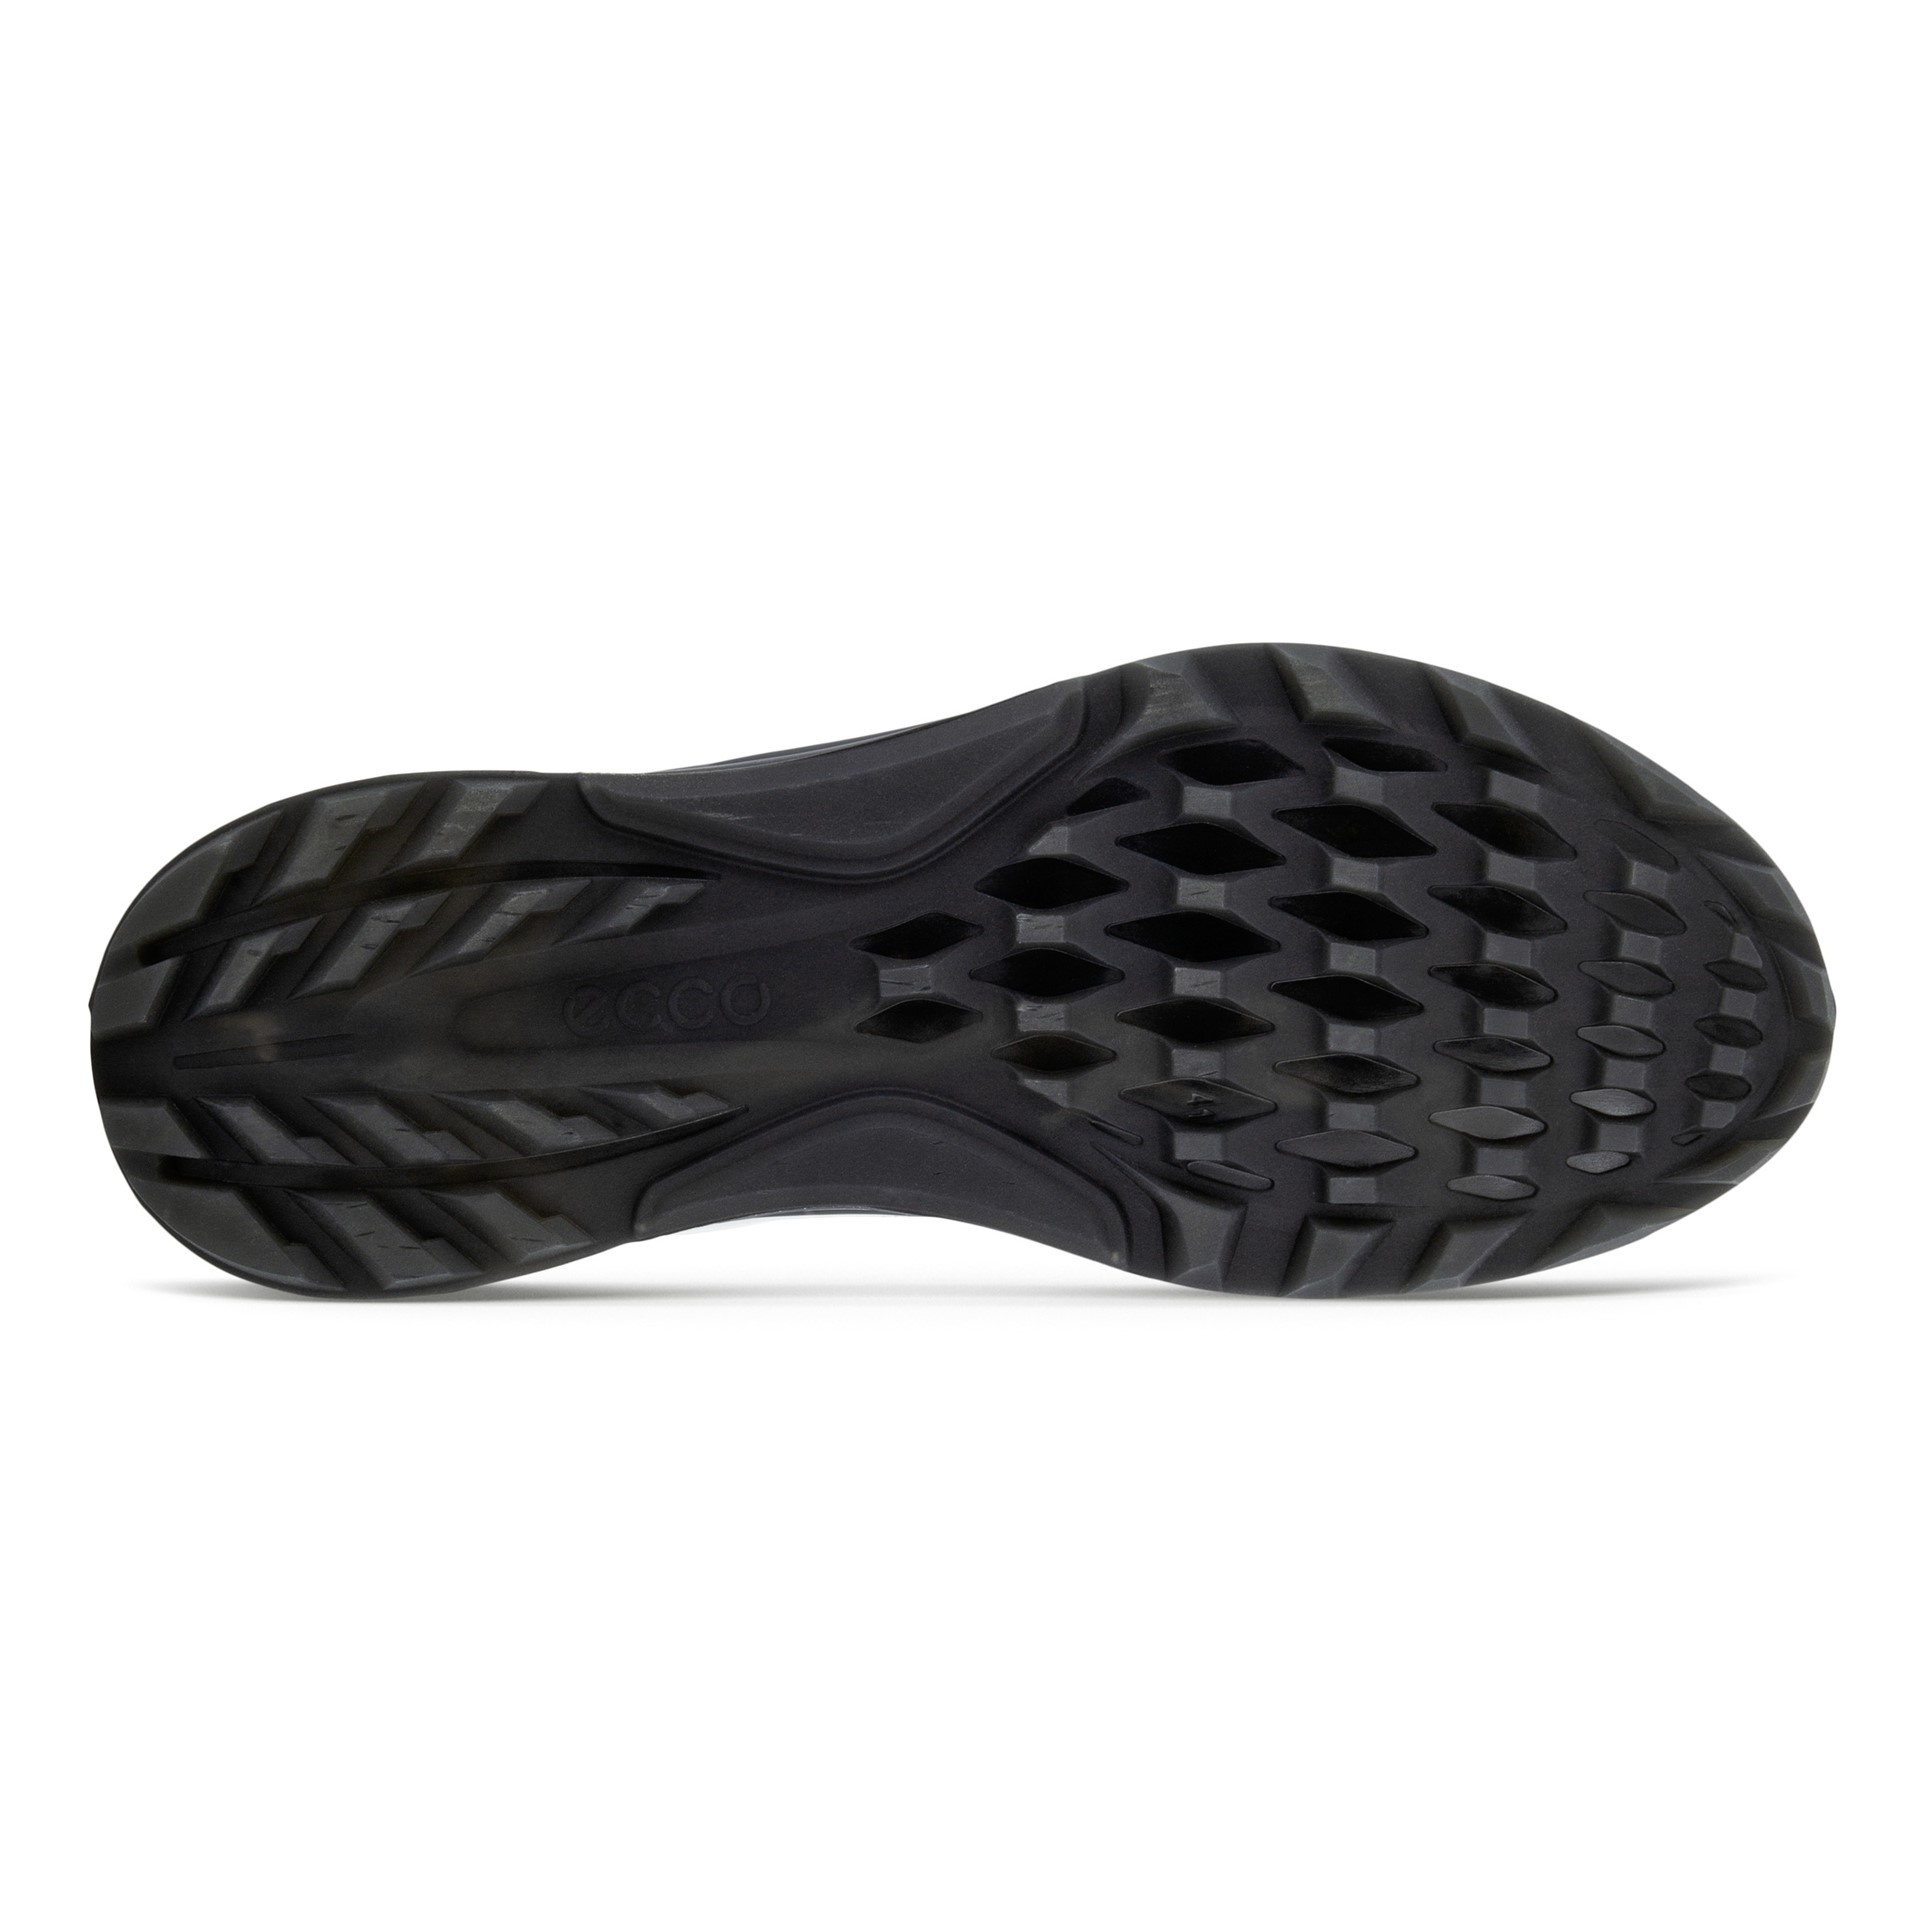 Ecco | 130404-51227 | M Golf Biom C4 Laced Shoe | White / Black